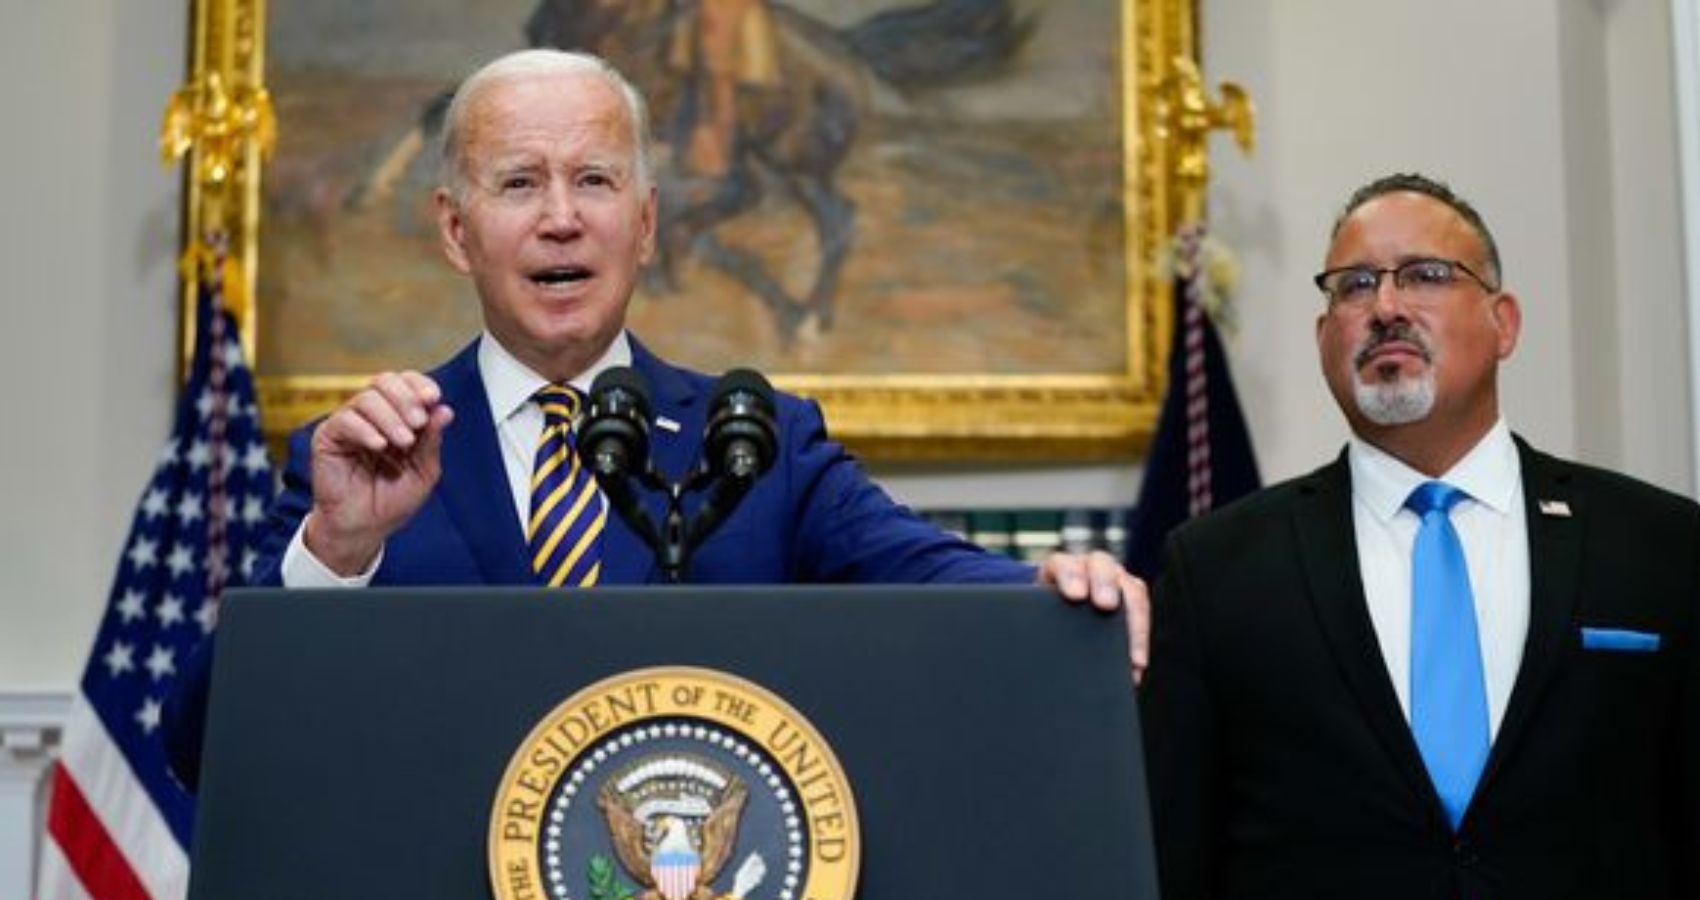 Biden’s Student Loan Forgiveness Plan To Cost $400 Billion